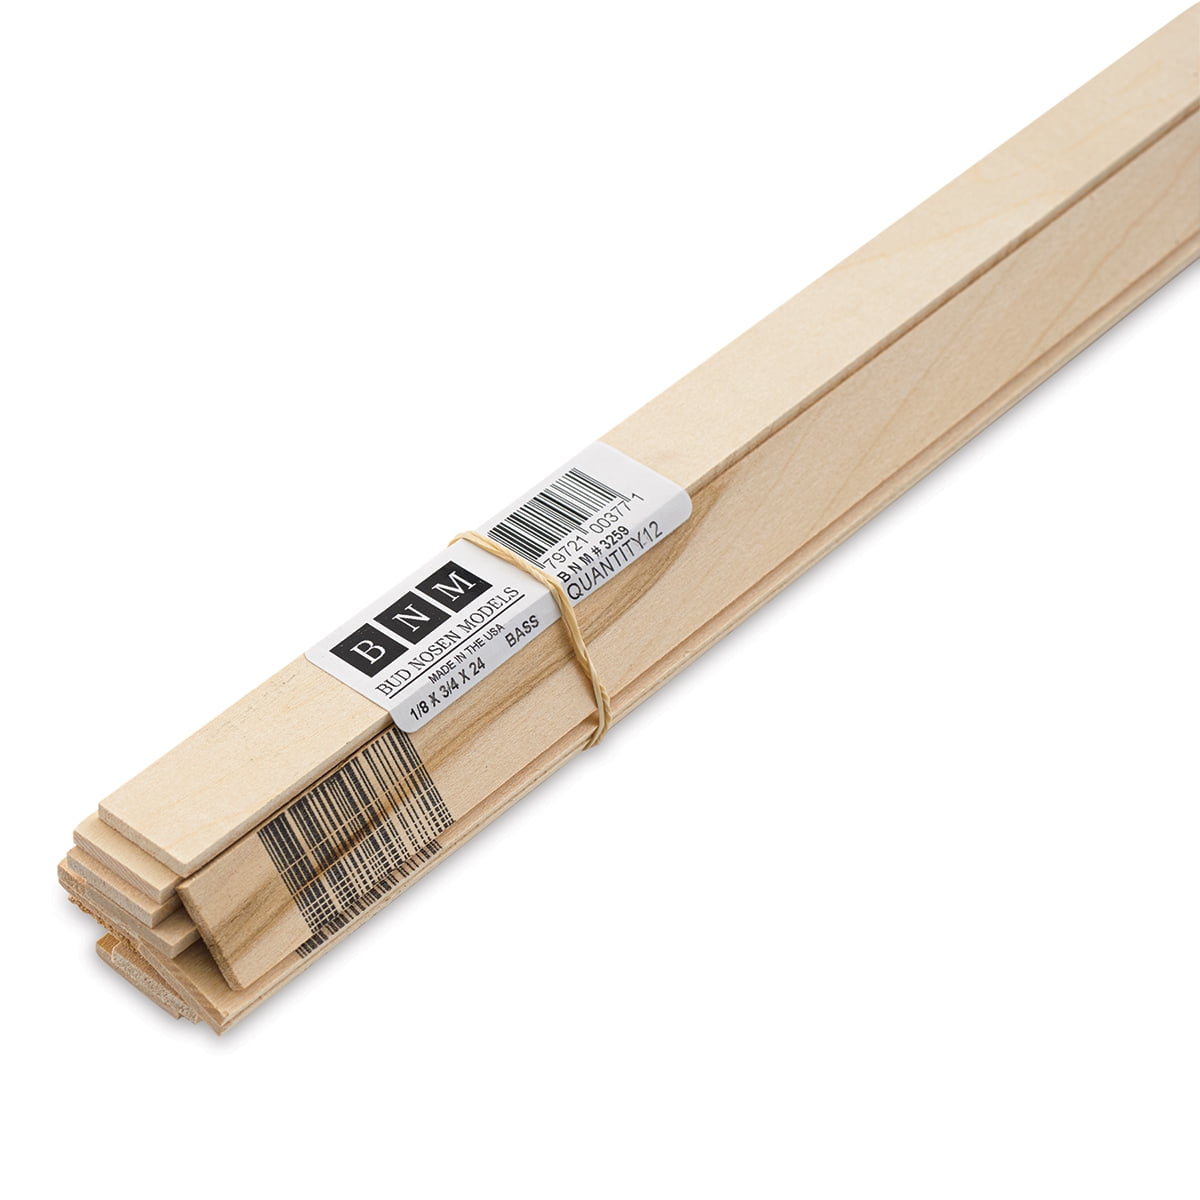 Bud Nosen Basswood Sticks - 1/8 inch x 3/4 inch x 24 inch, 12 Sticks